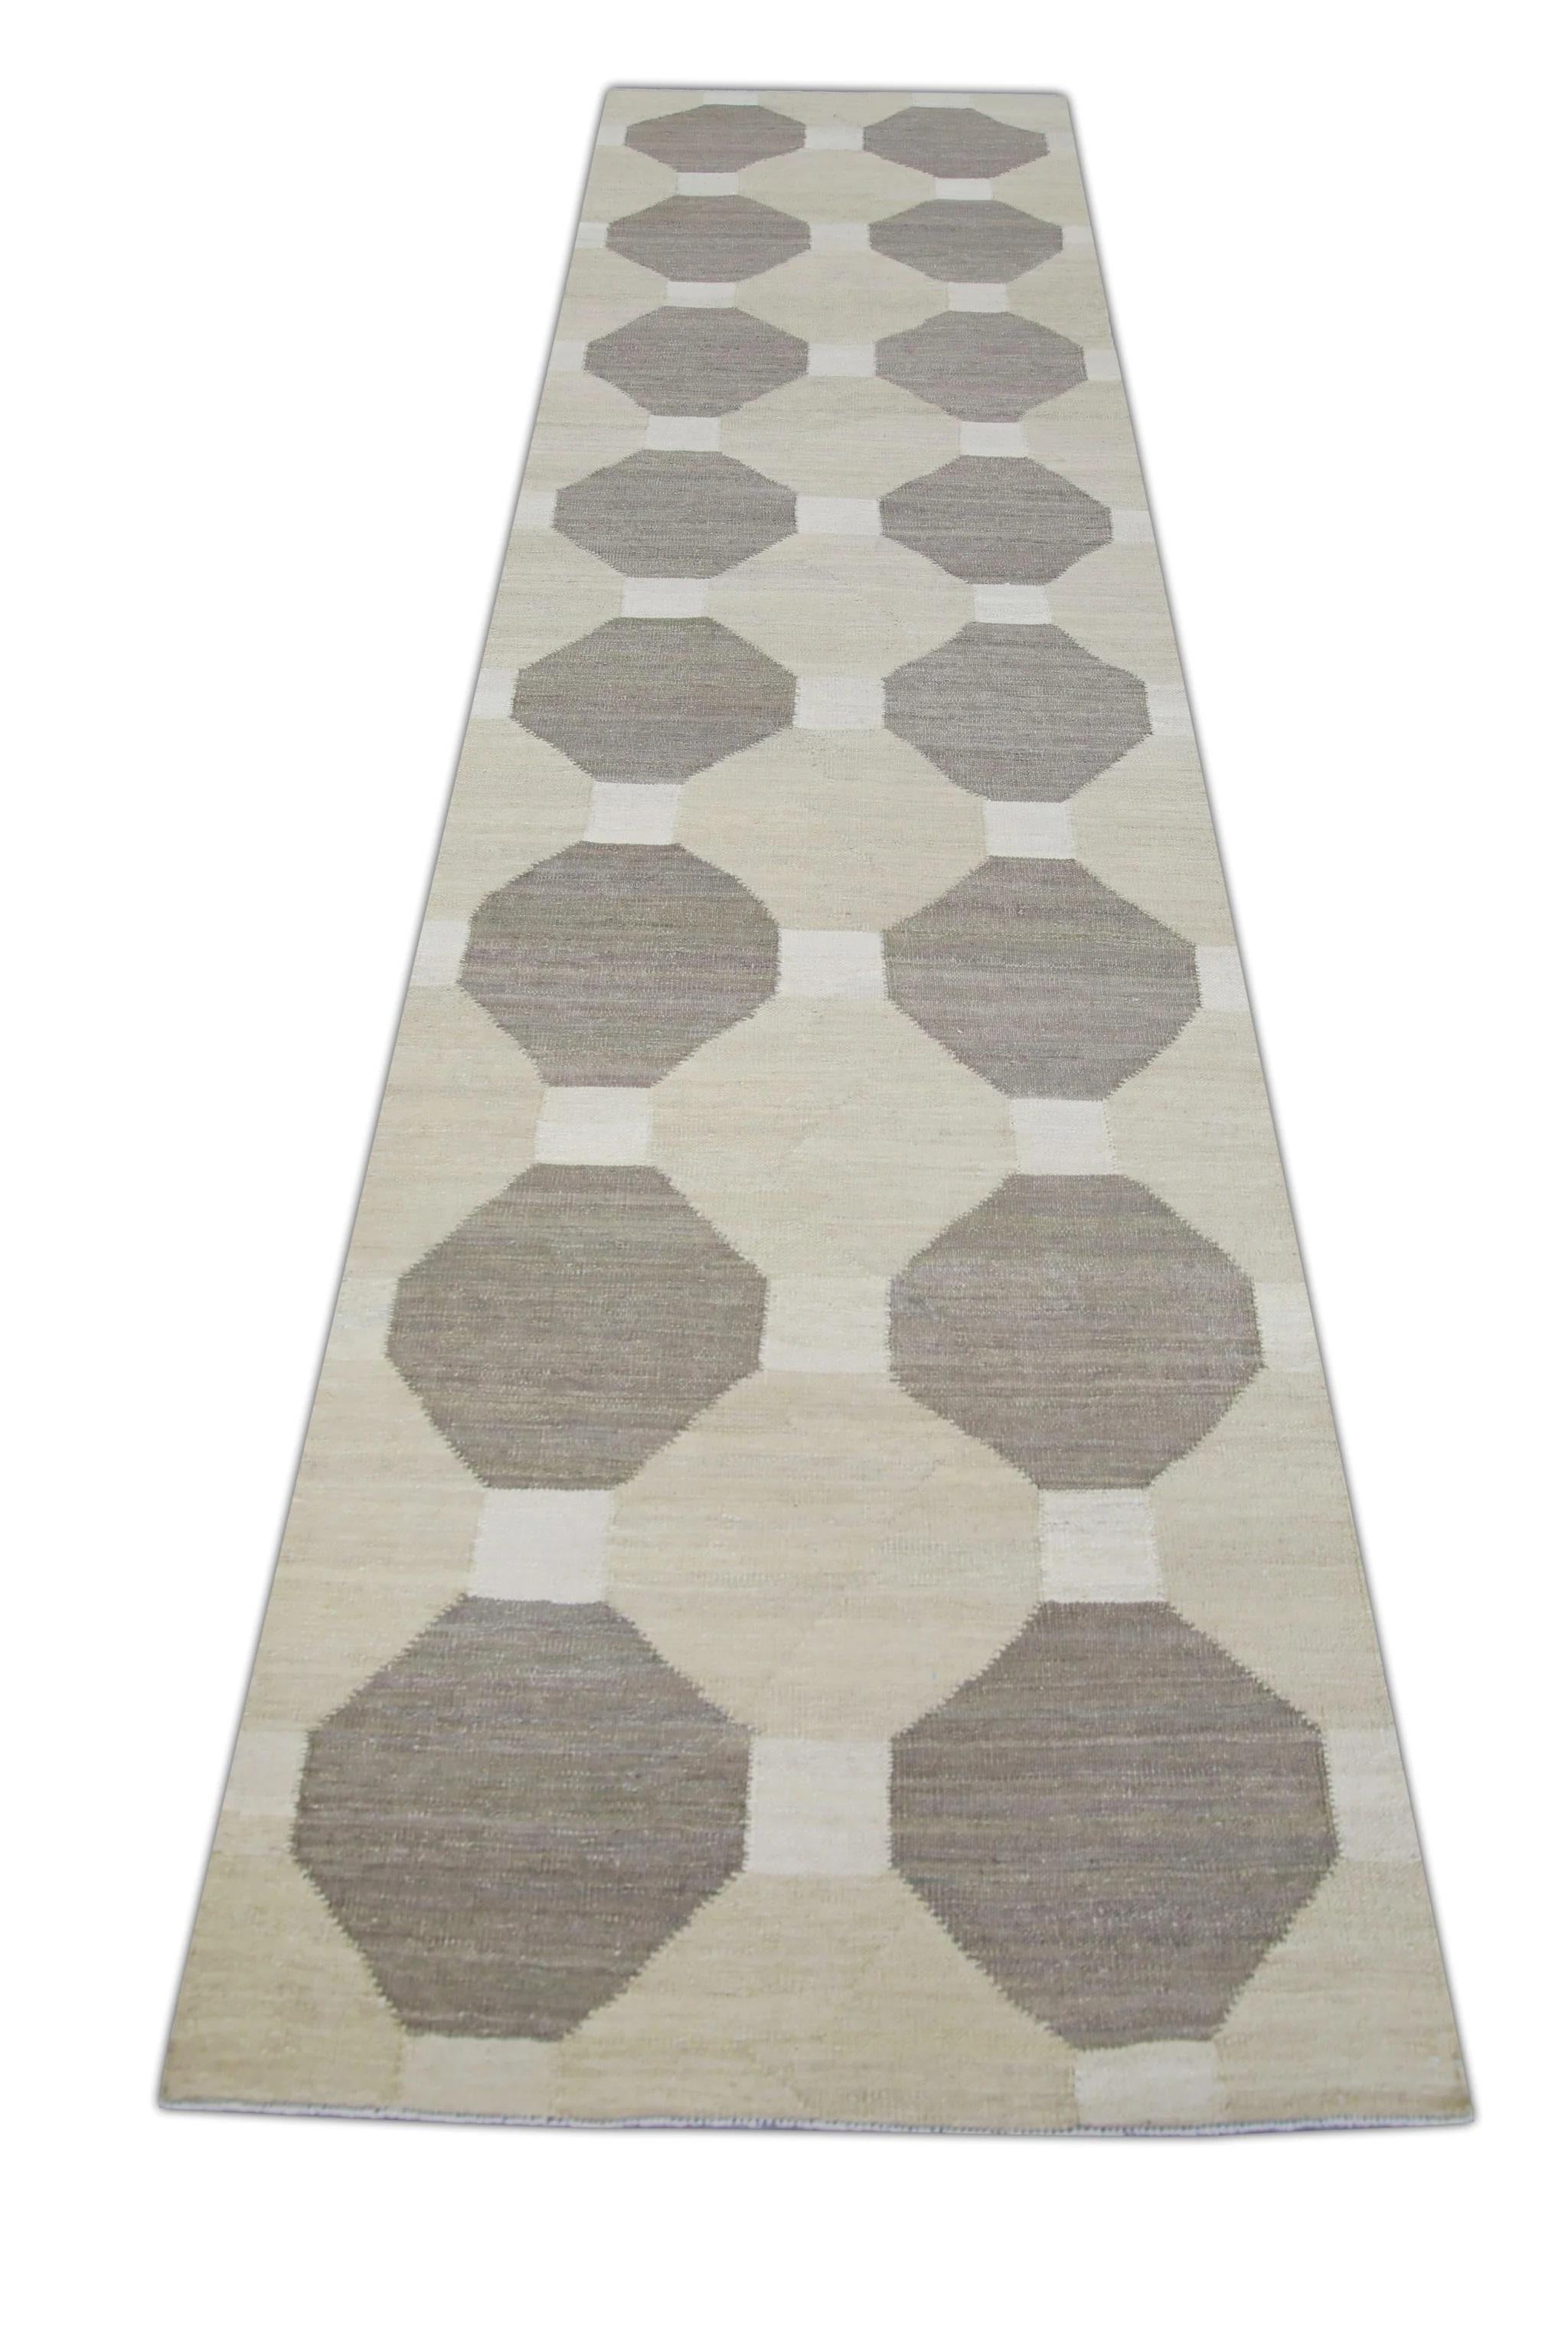 Contemporary Tan and Brown Geometric Design Flatweave Handmade Wool Rug 3'1